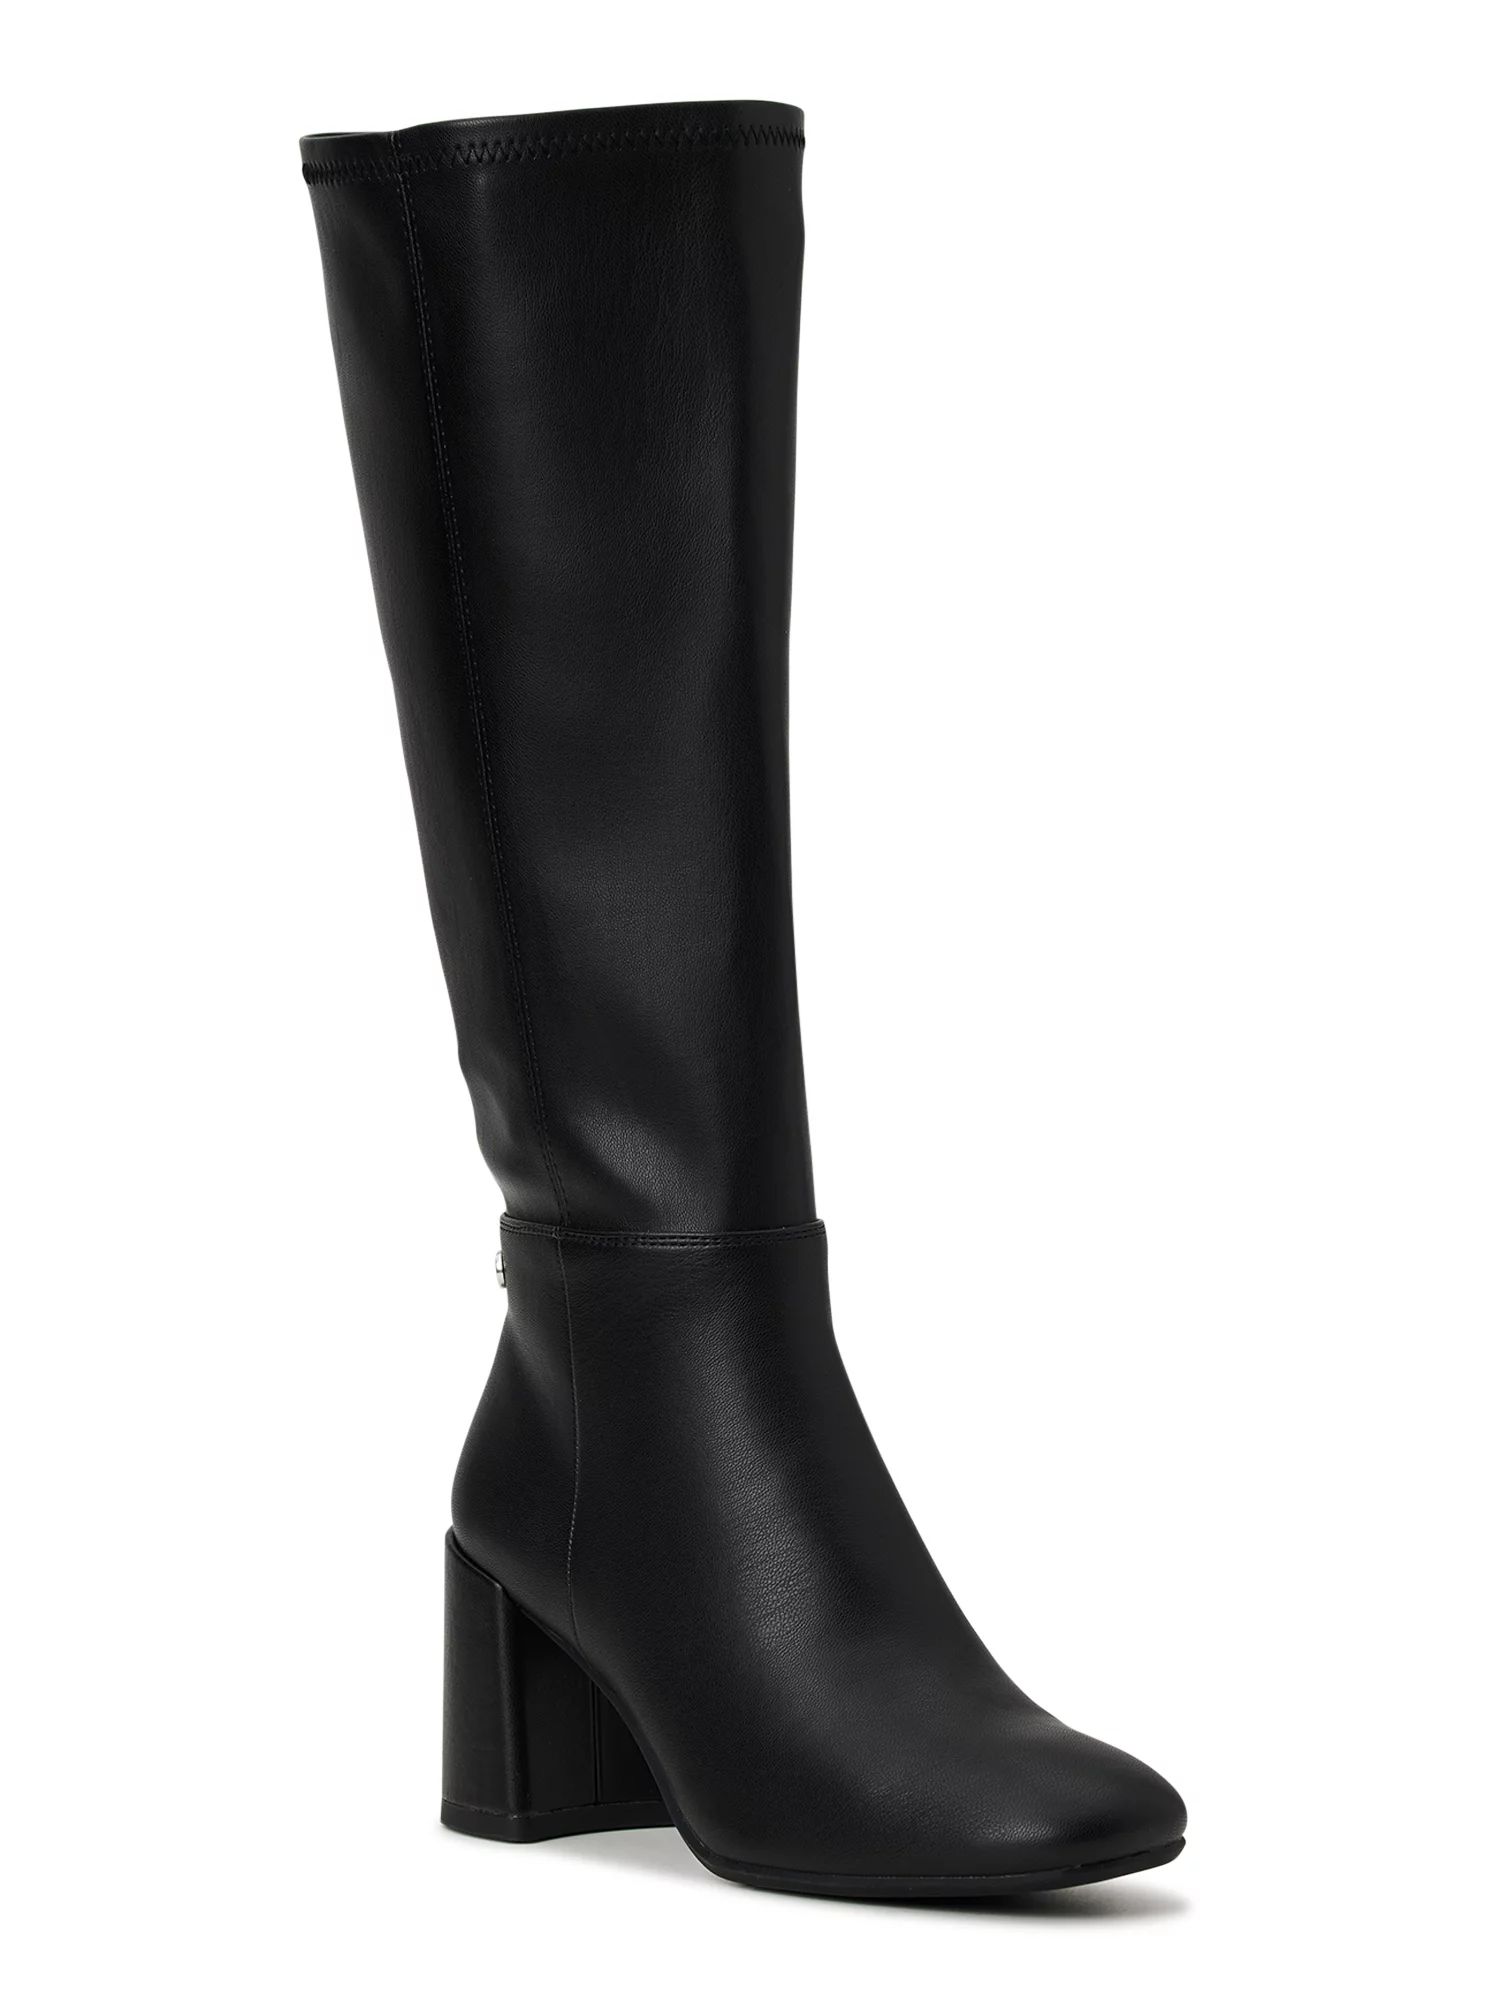 Madden NYC Women's Tall Dress Boots | Walmart (US)